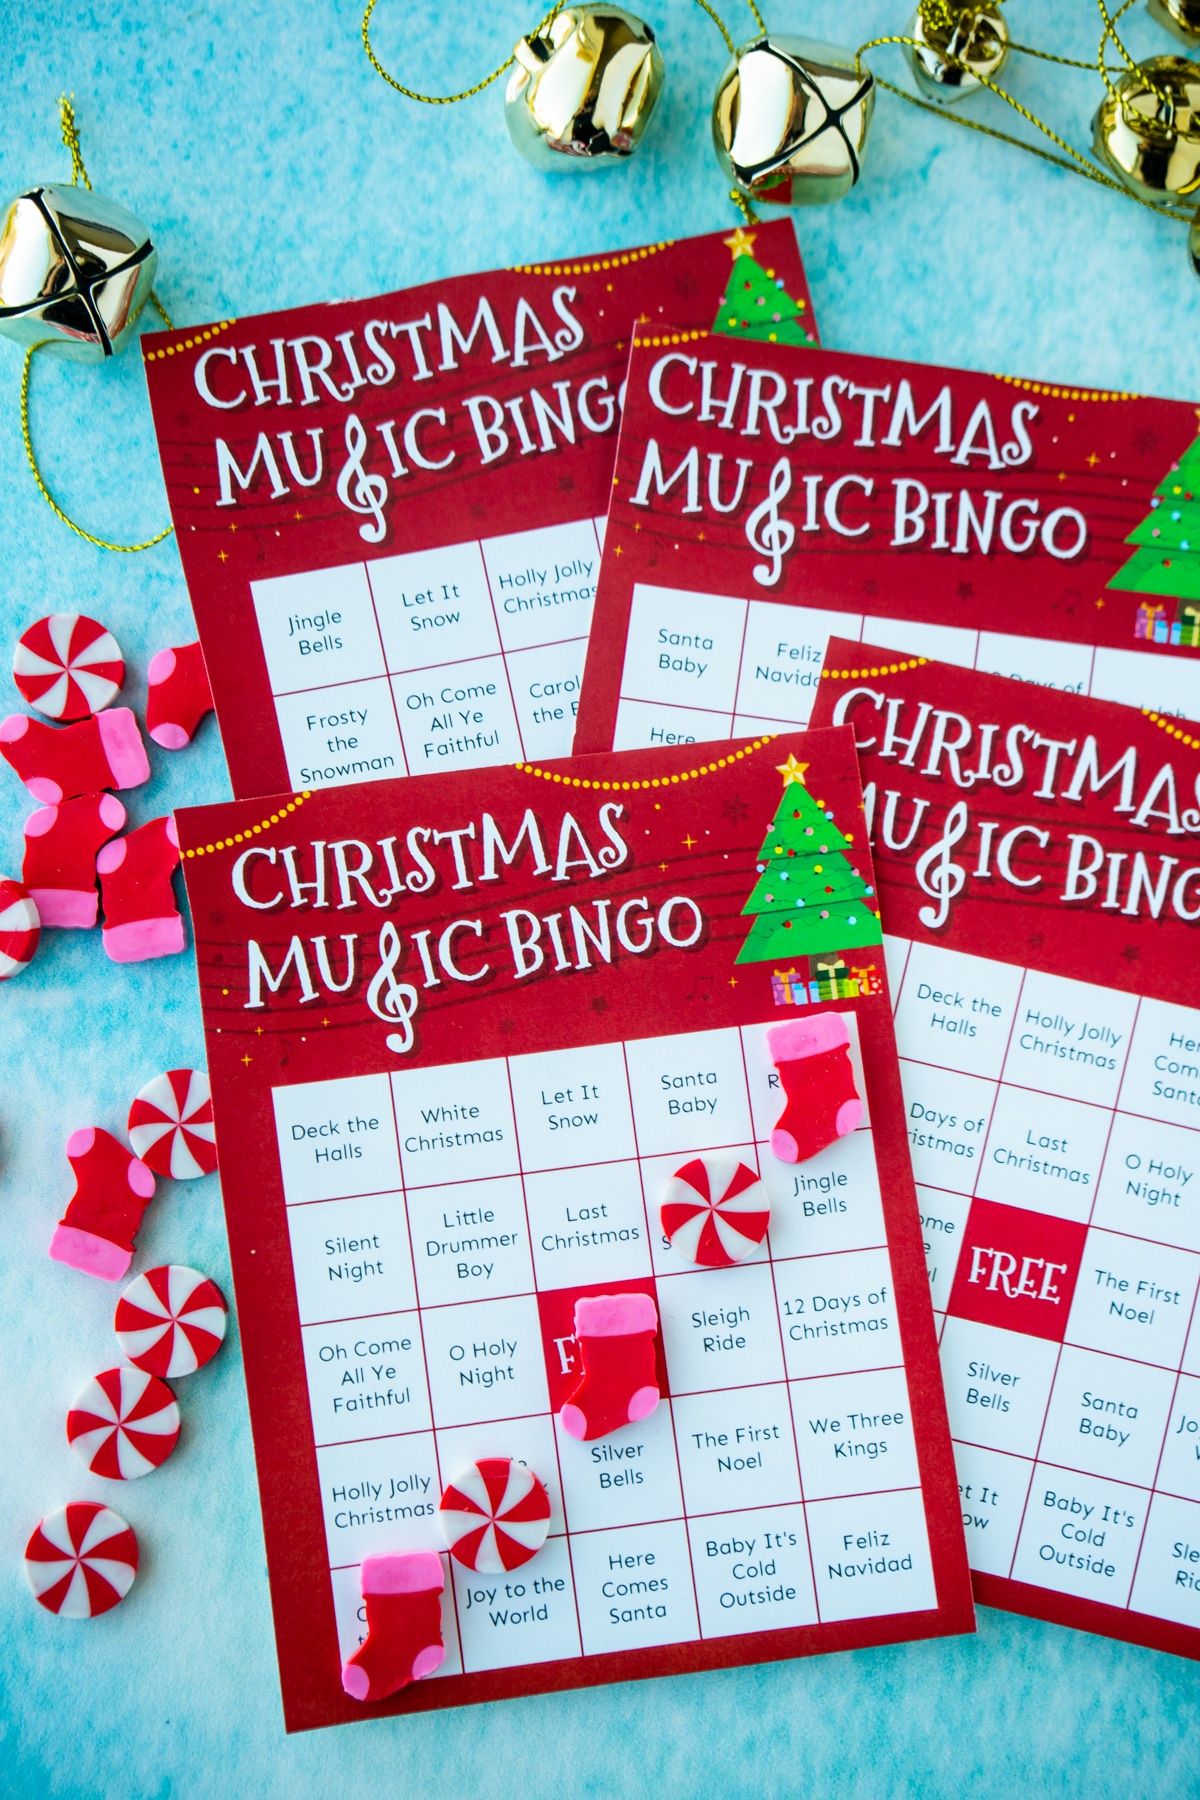 Cuatro cartones de bingo de música navideña sobre un fondo azul.